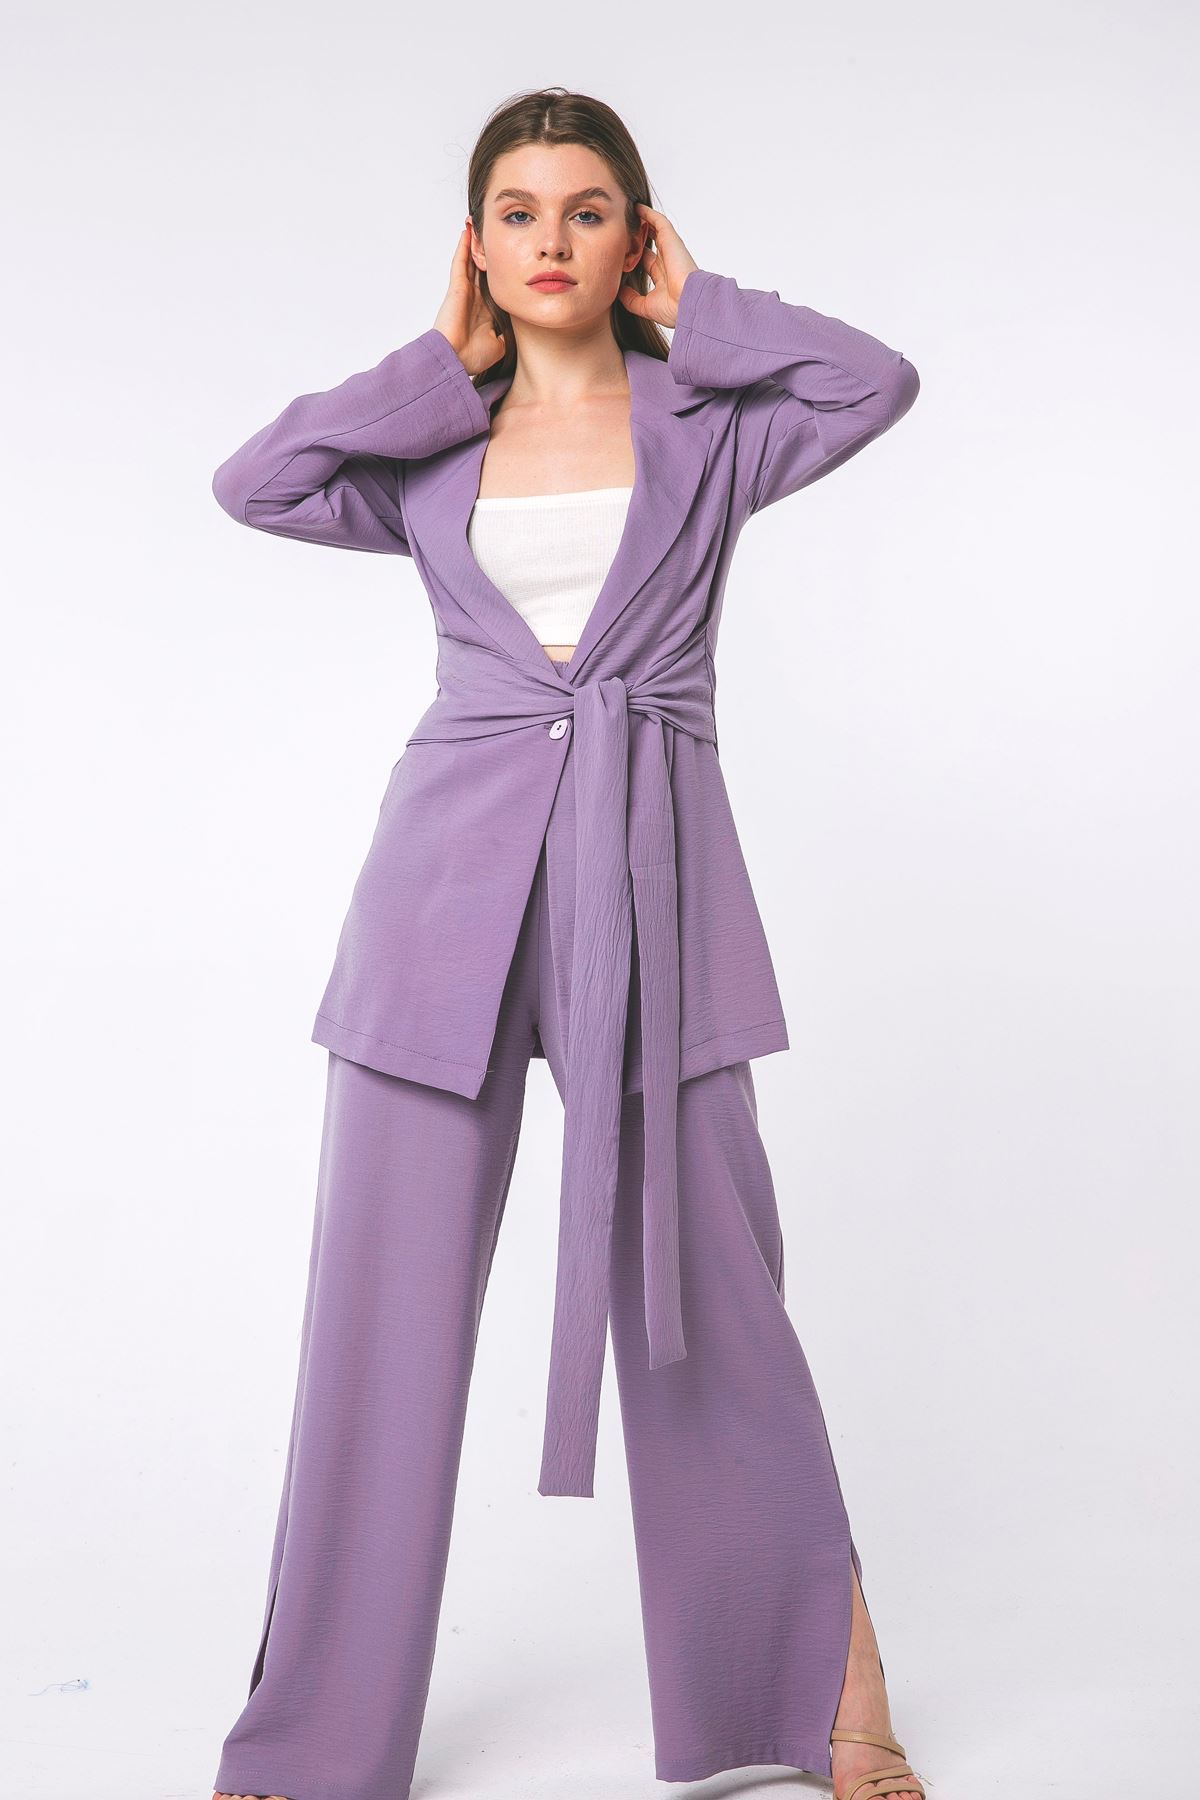 Aerobin Fabric Long Sleeve Below Hip Comfy Tied Front Women Jacket - Lilac